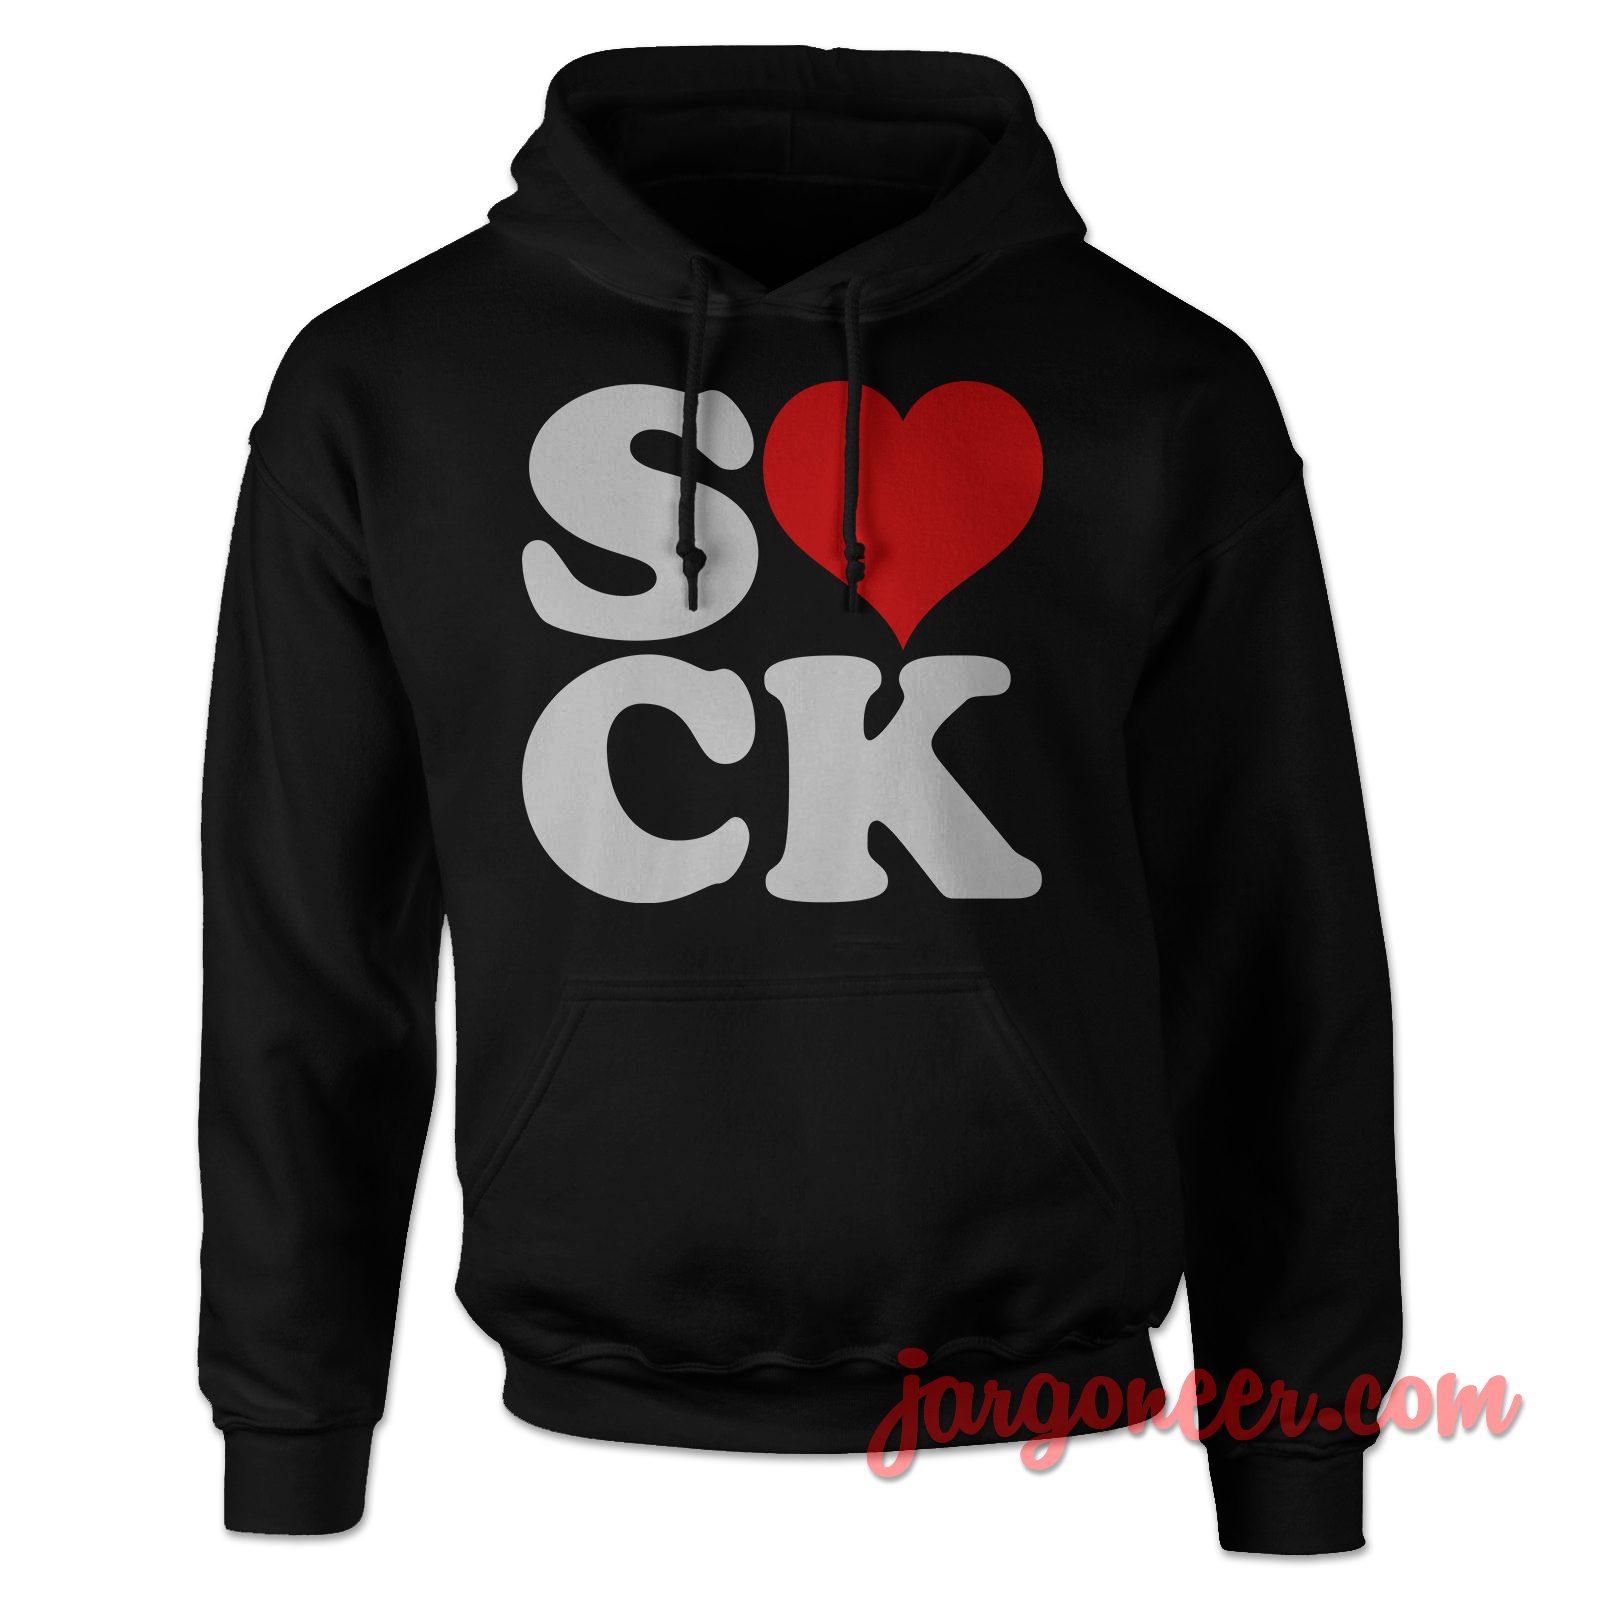 Love Suck Black Hoody - Shop Unique Graphic Cool Shirt Designs